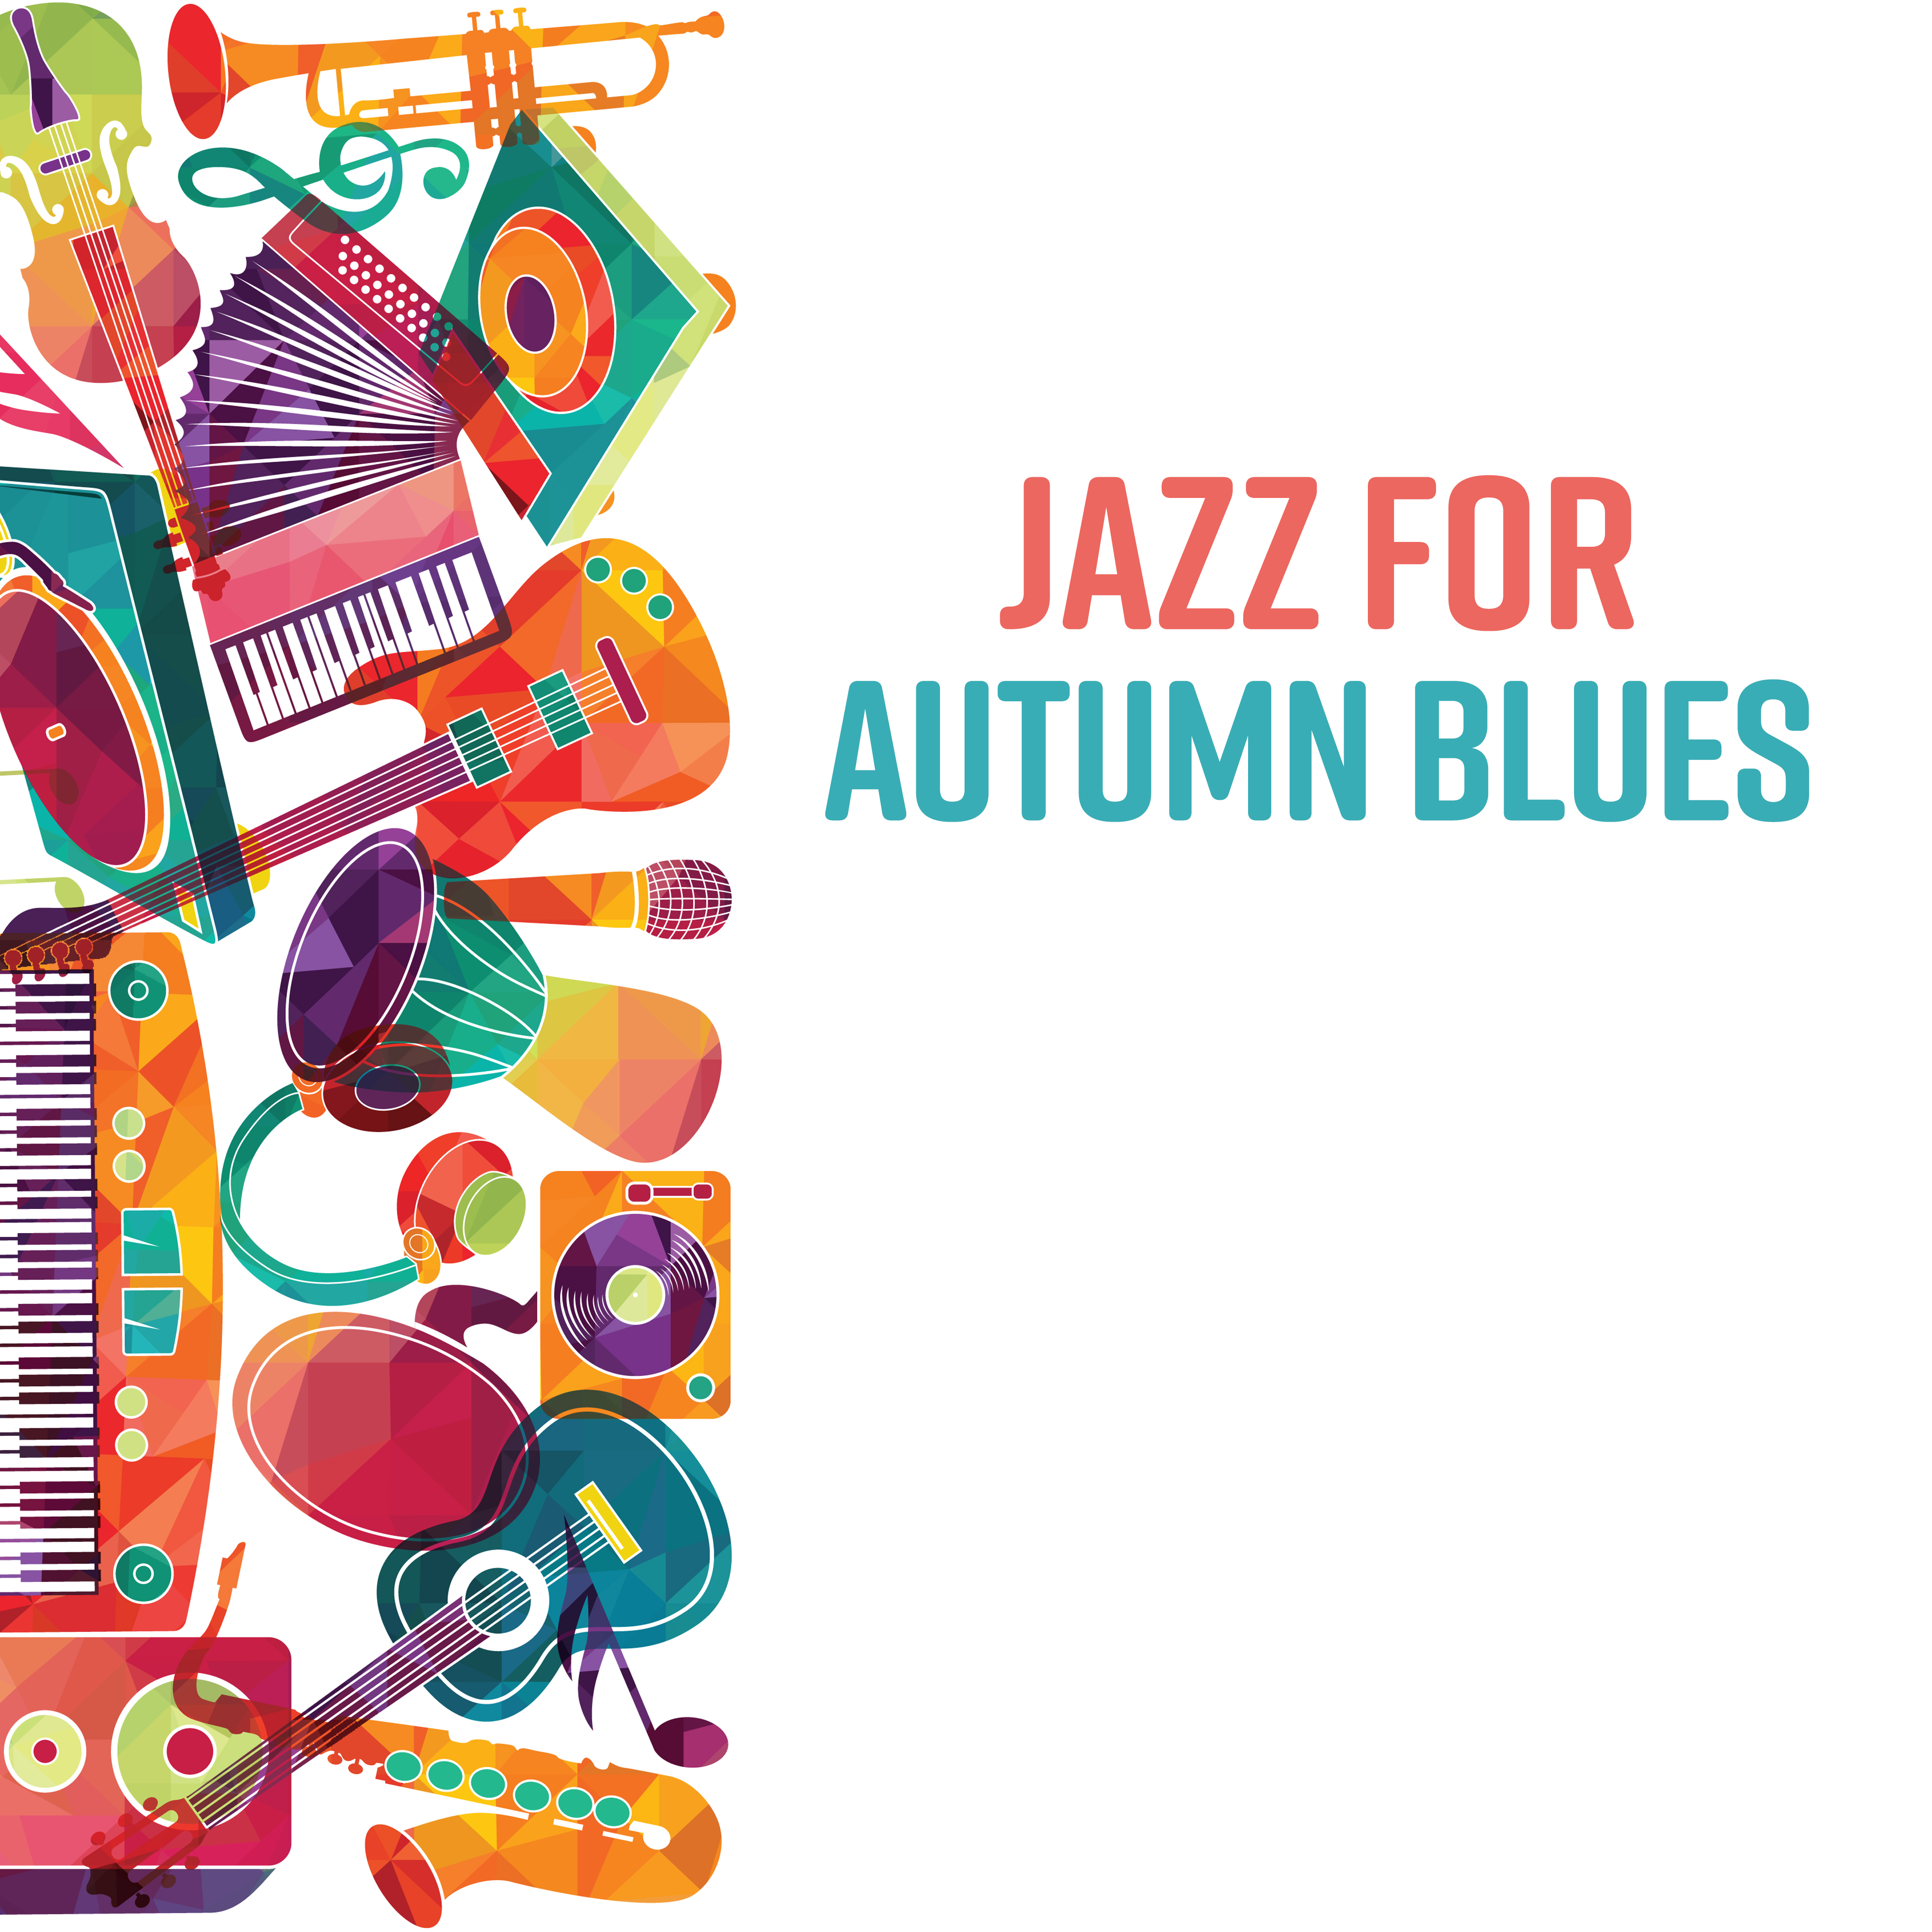 Jazz for Autumn Blues